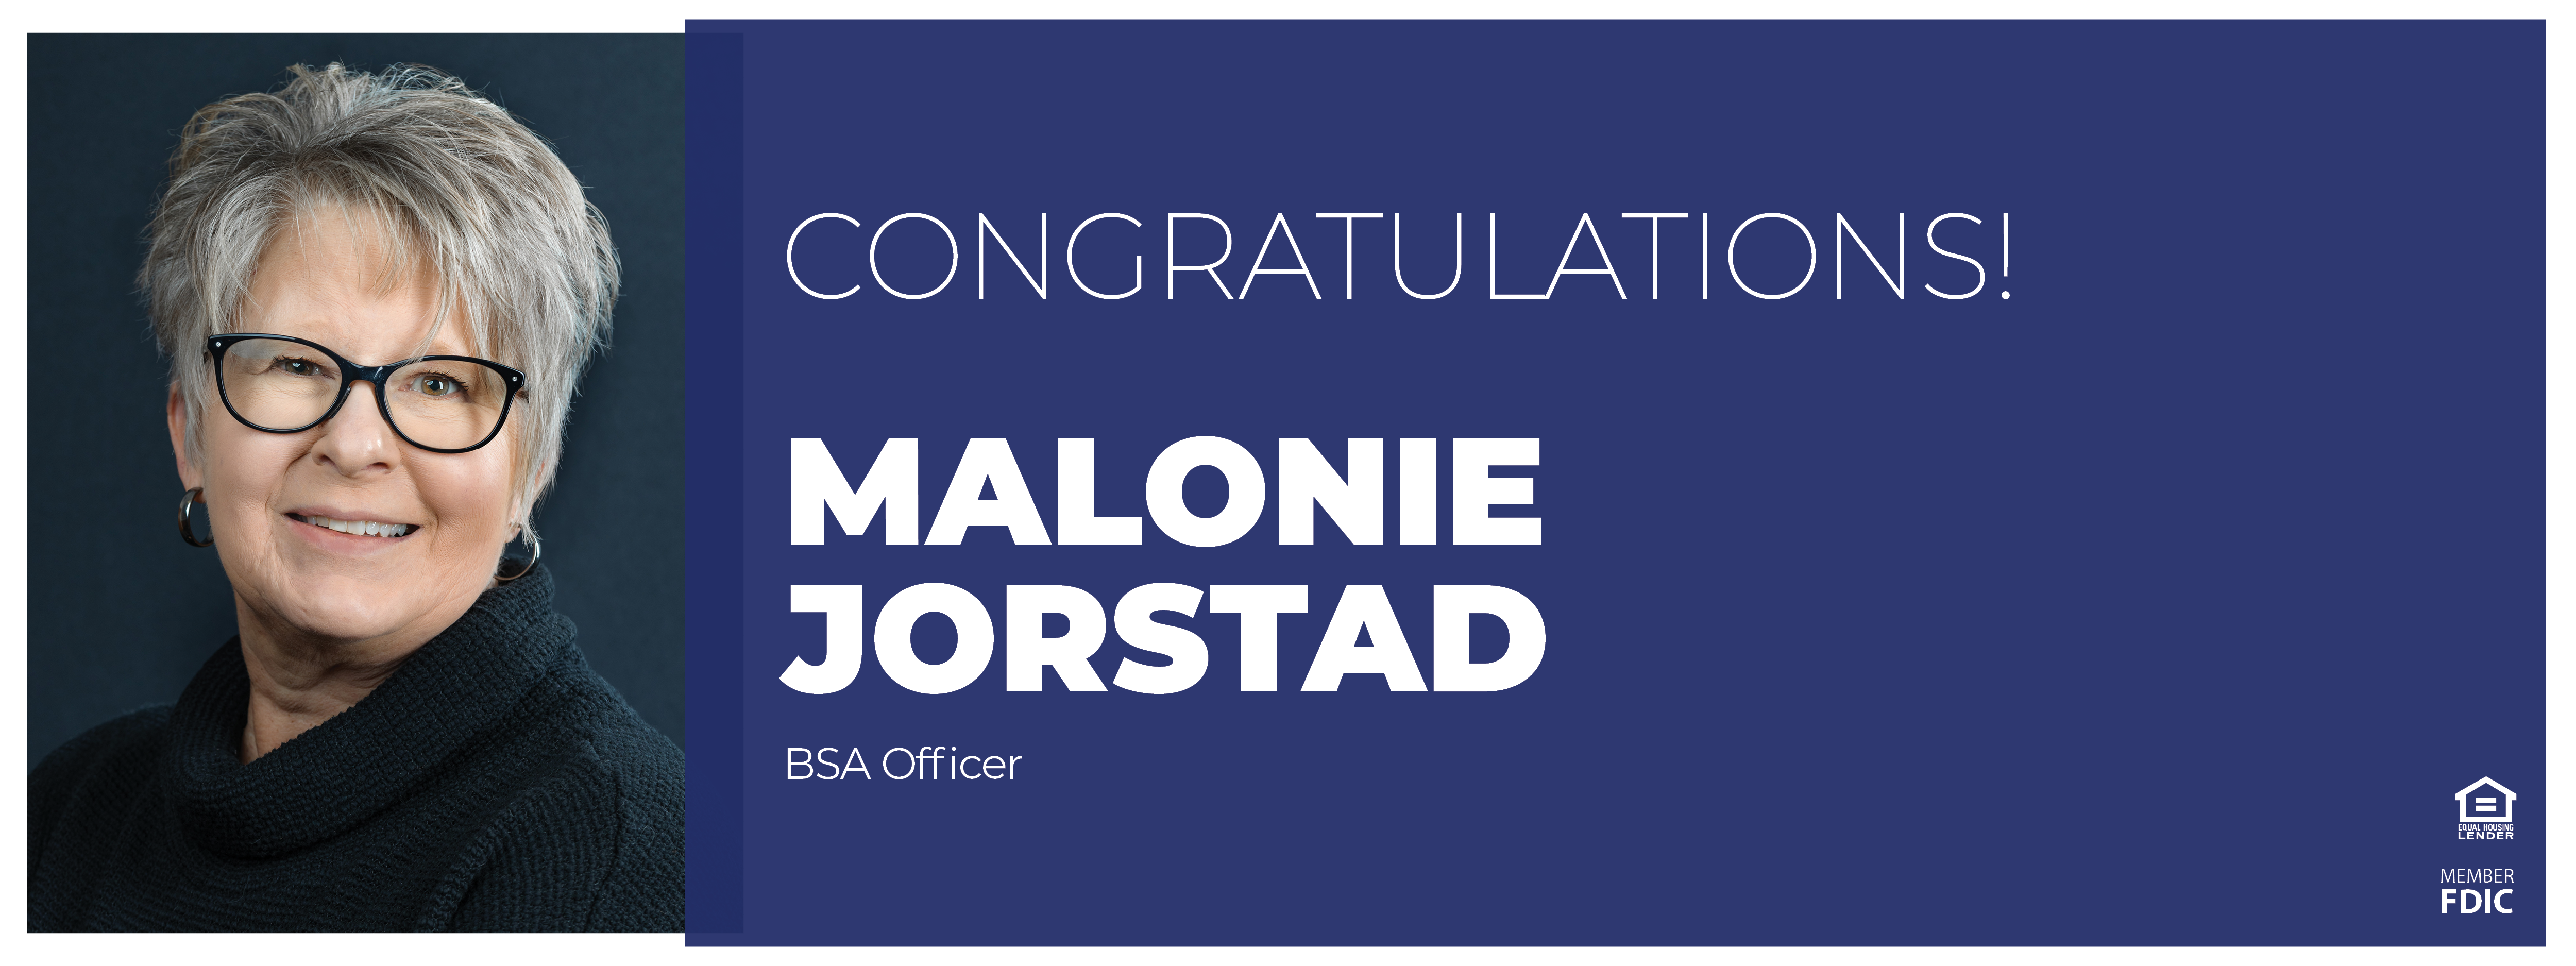 Congratulations Malonie Jorstad